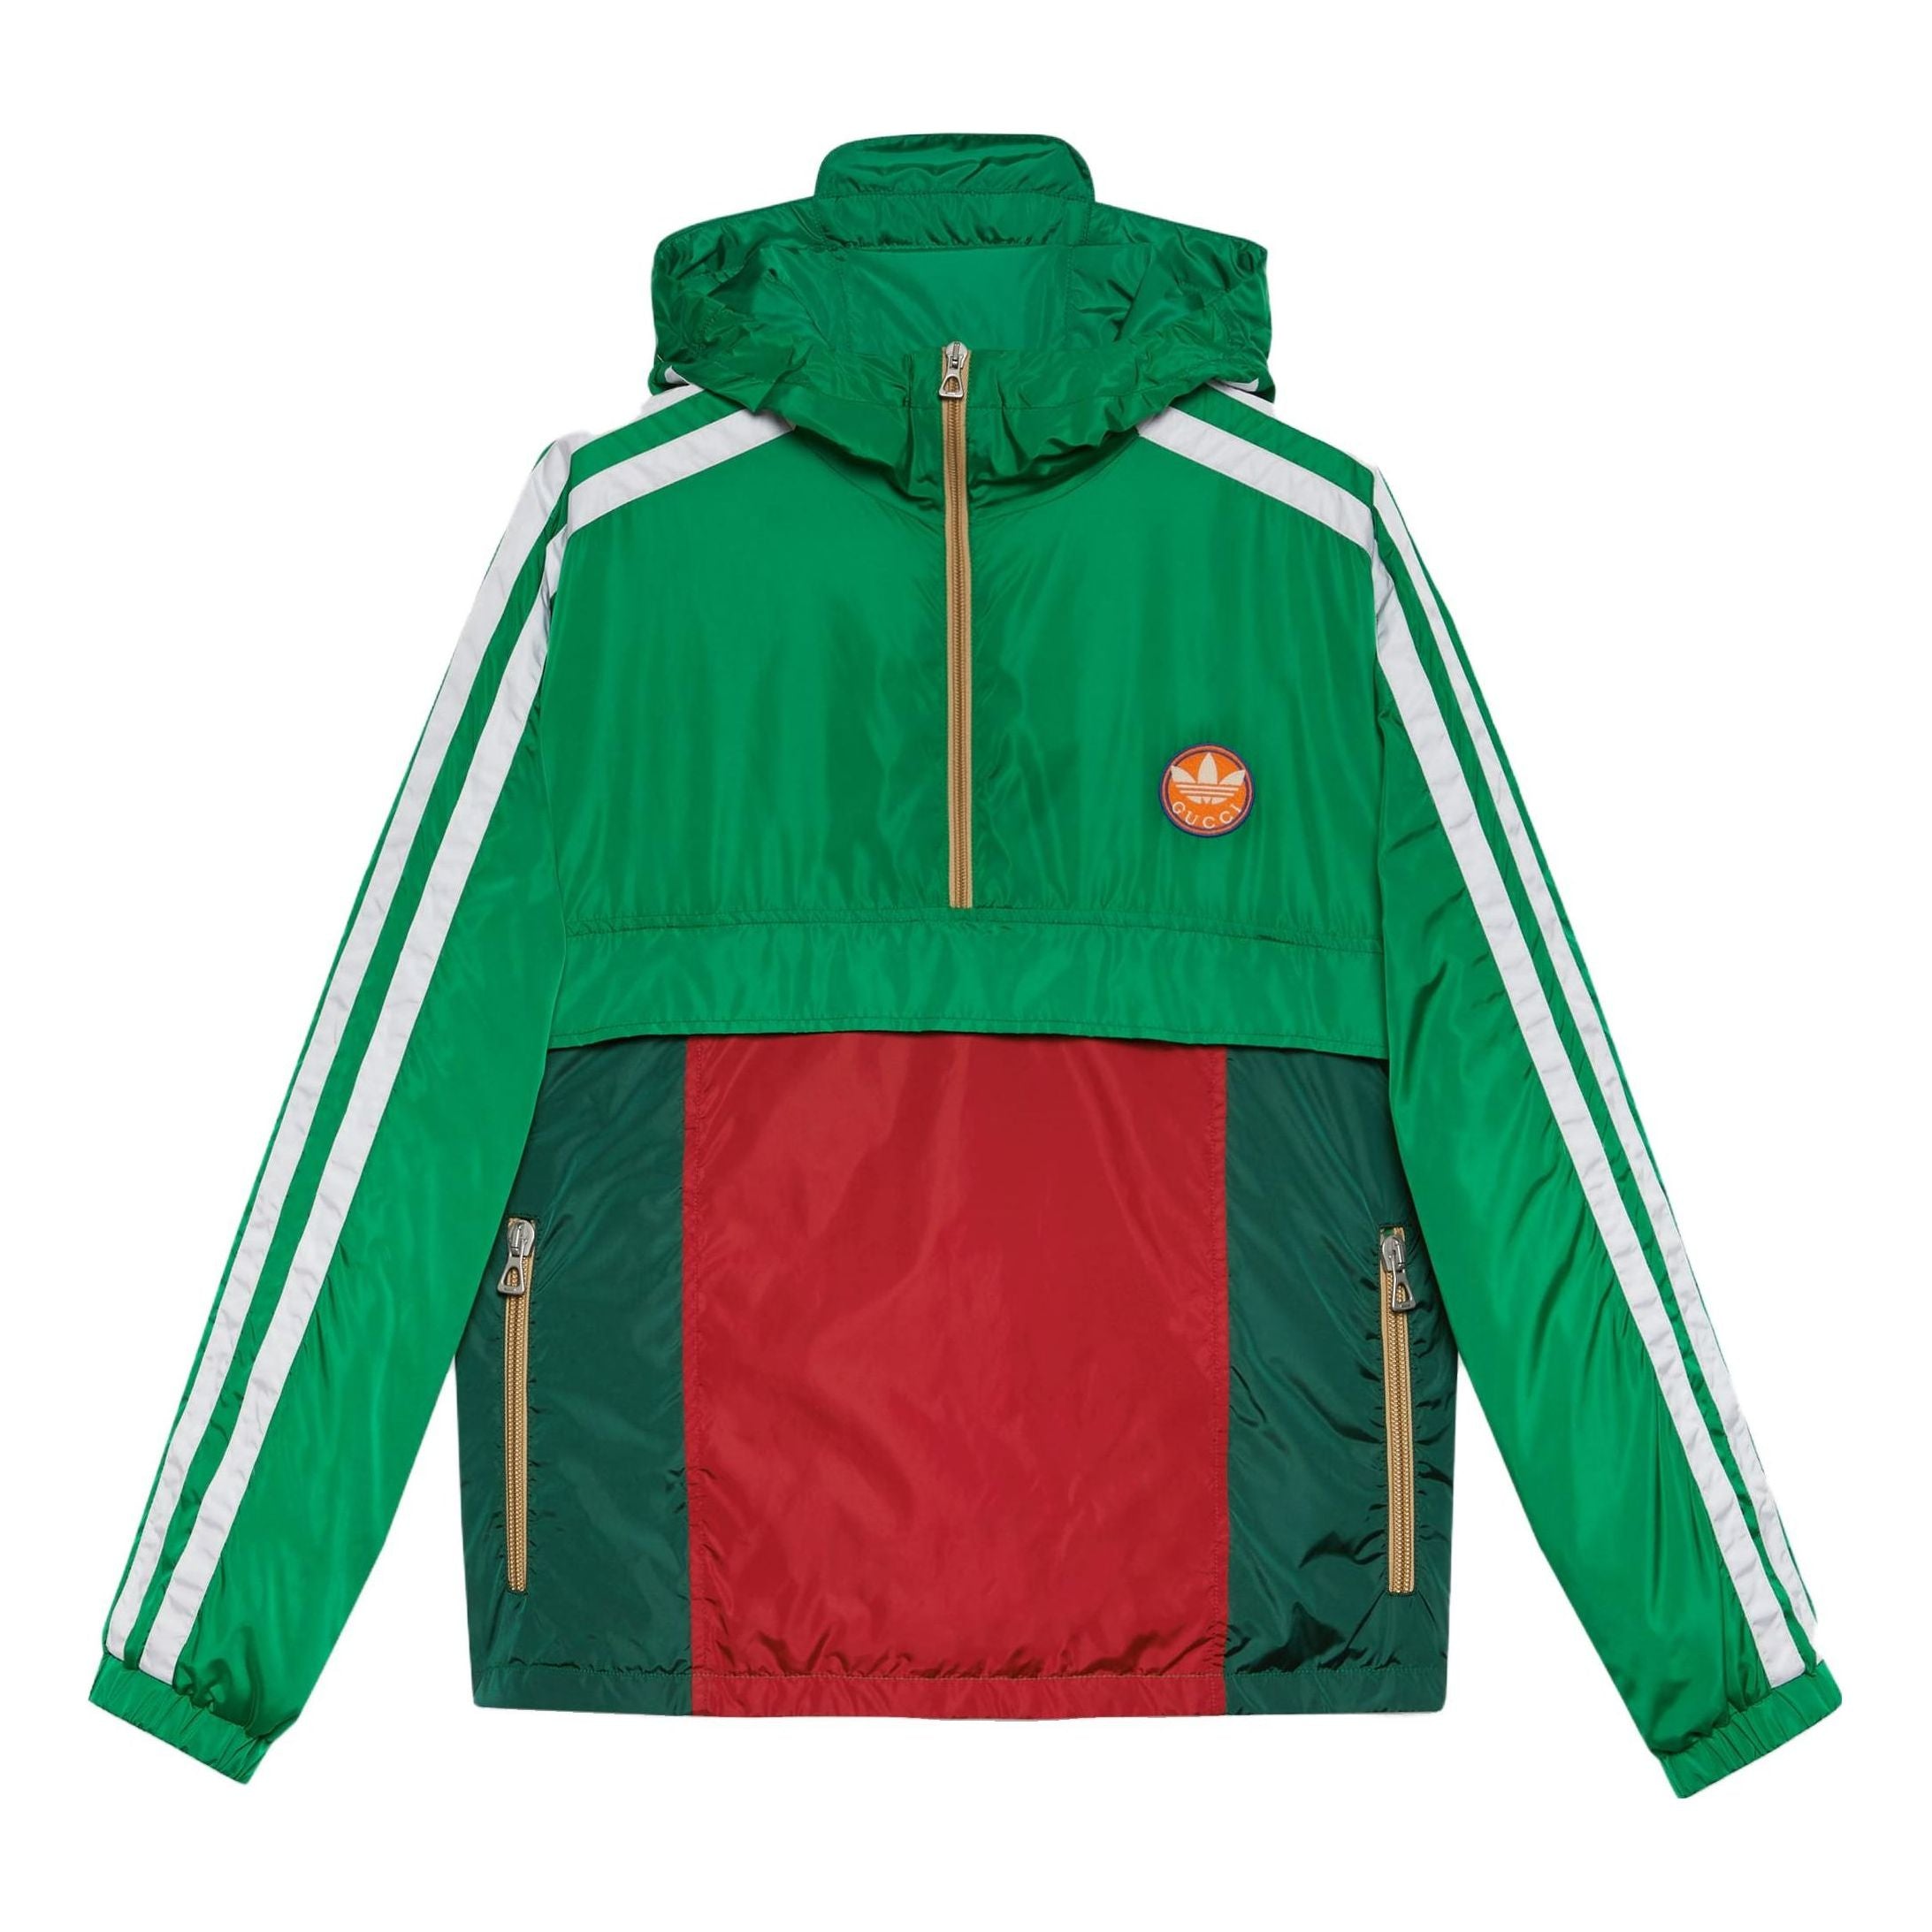 Gucci x adidas 3 Stripe Parachute Nylon Anorak Jacket 'Green 